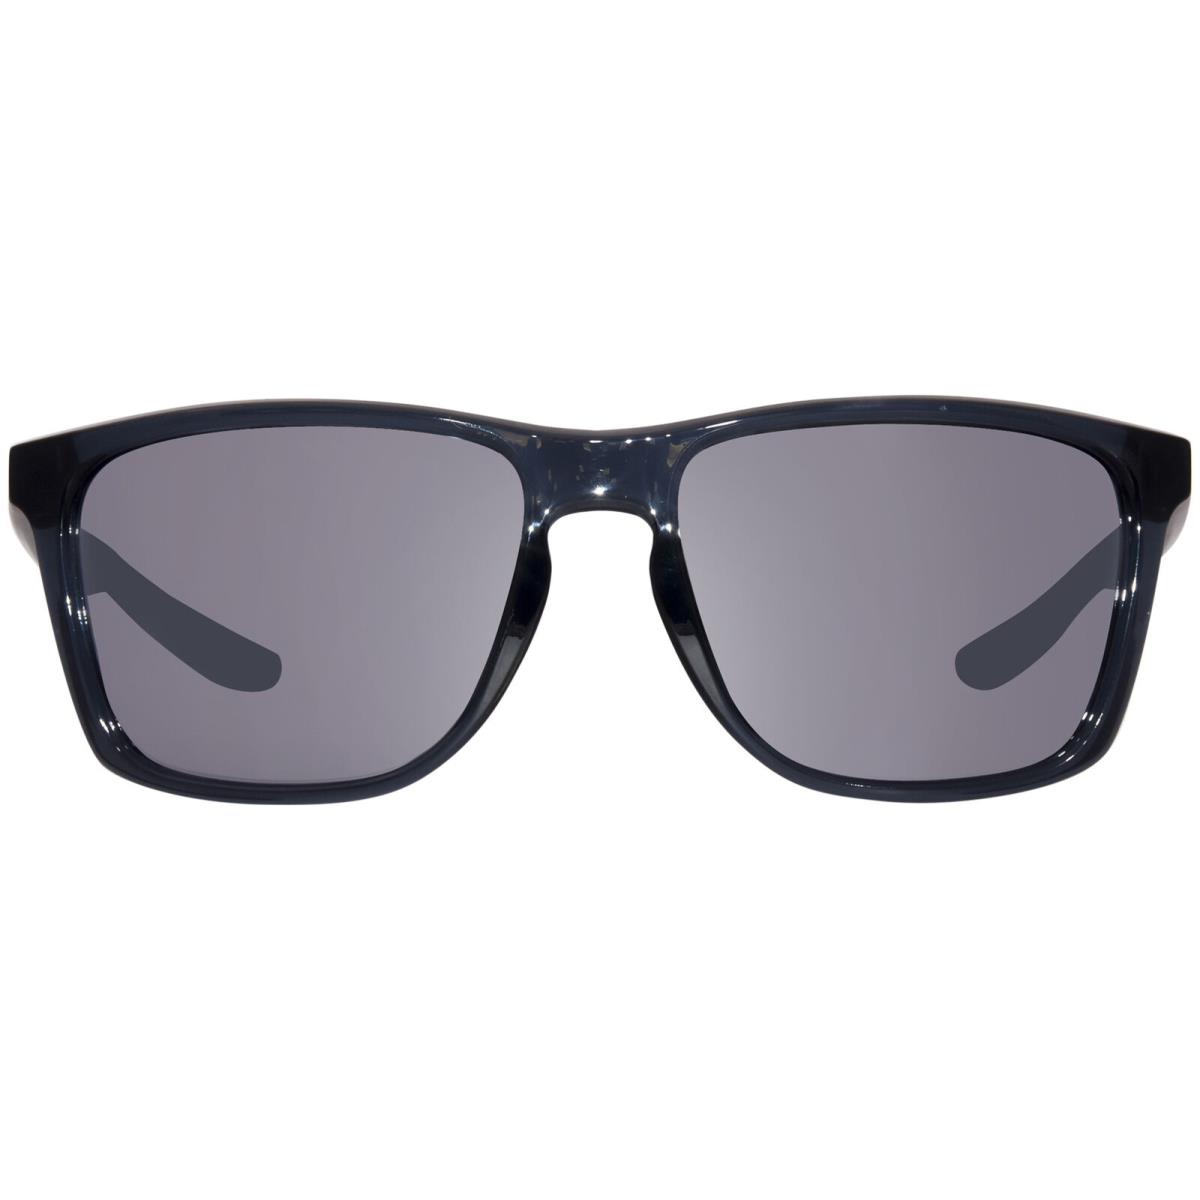 Nike Fortune FD1692 021 Sunglasses Dark Grey/silver Flash Square Shape 57mm - Frame: Gray, Lens: Gray